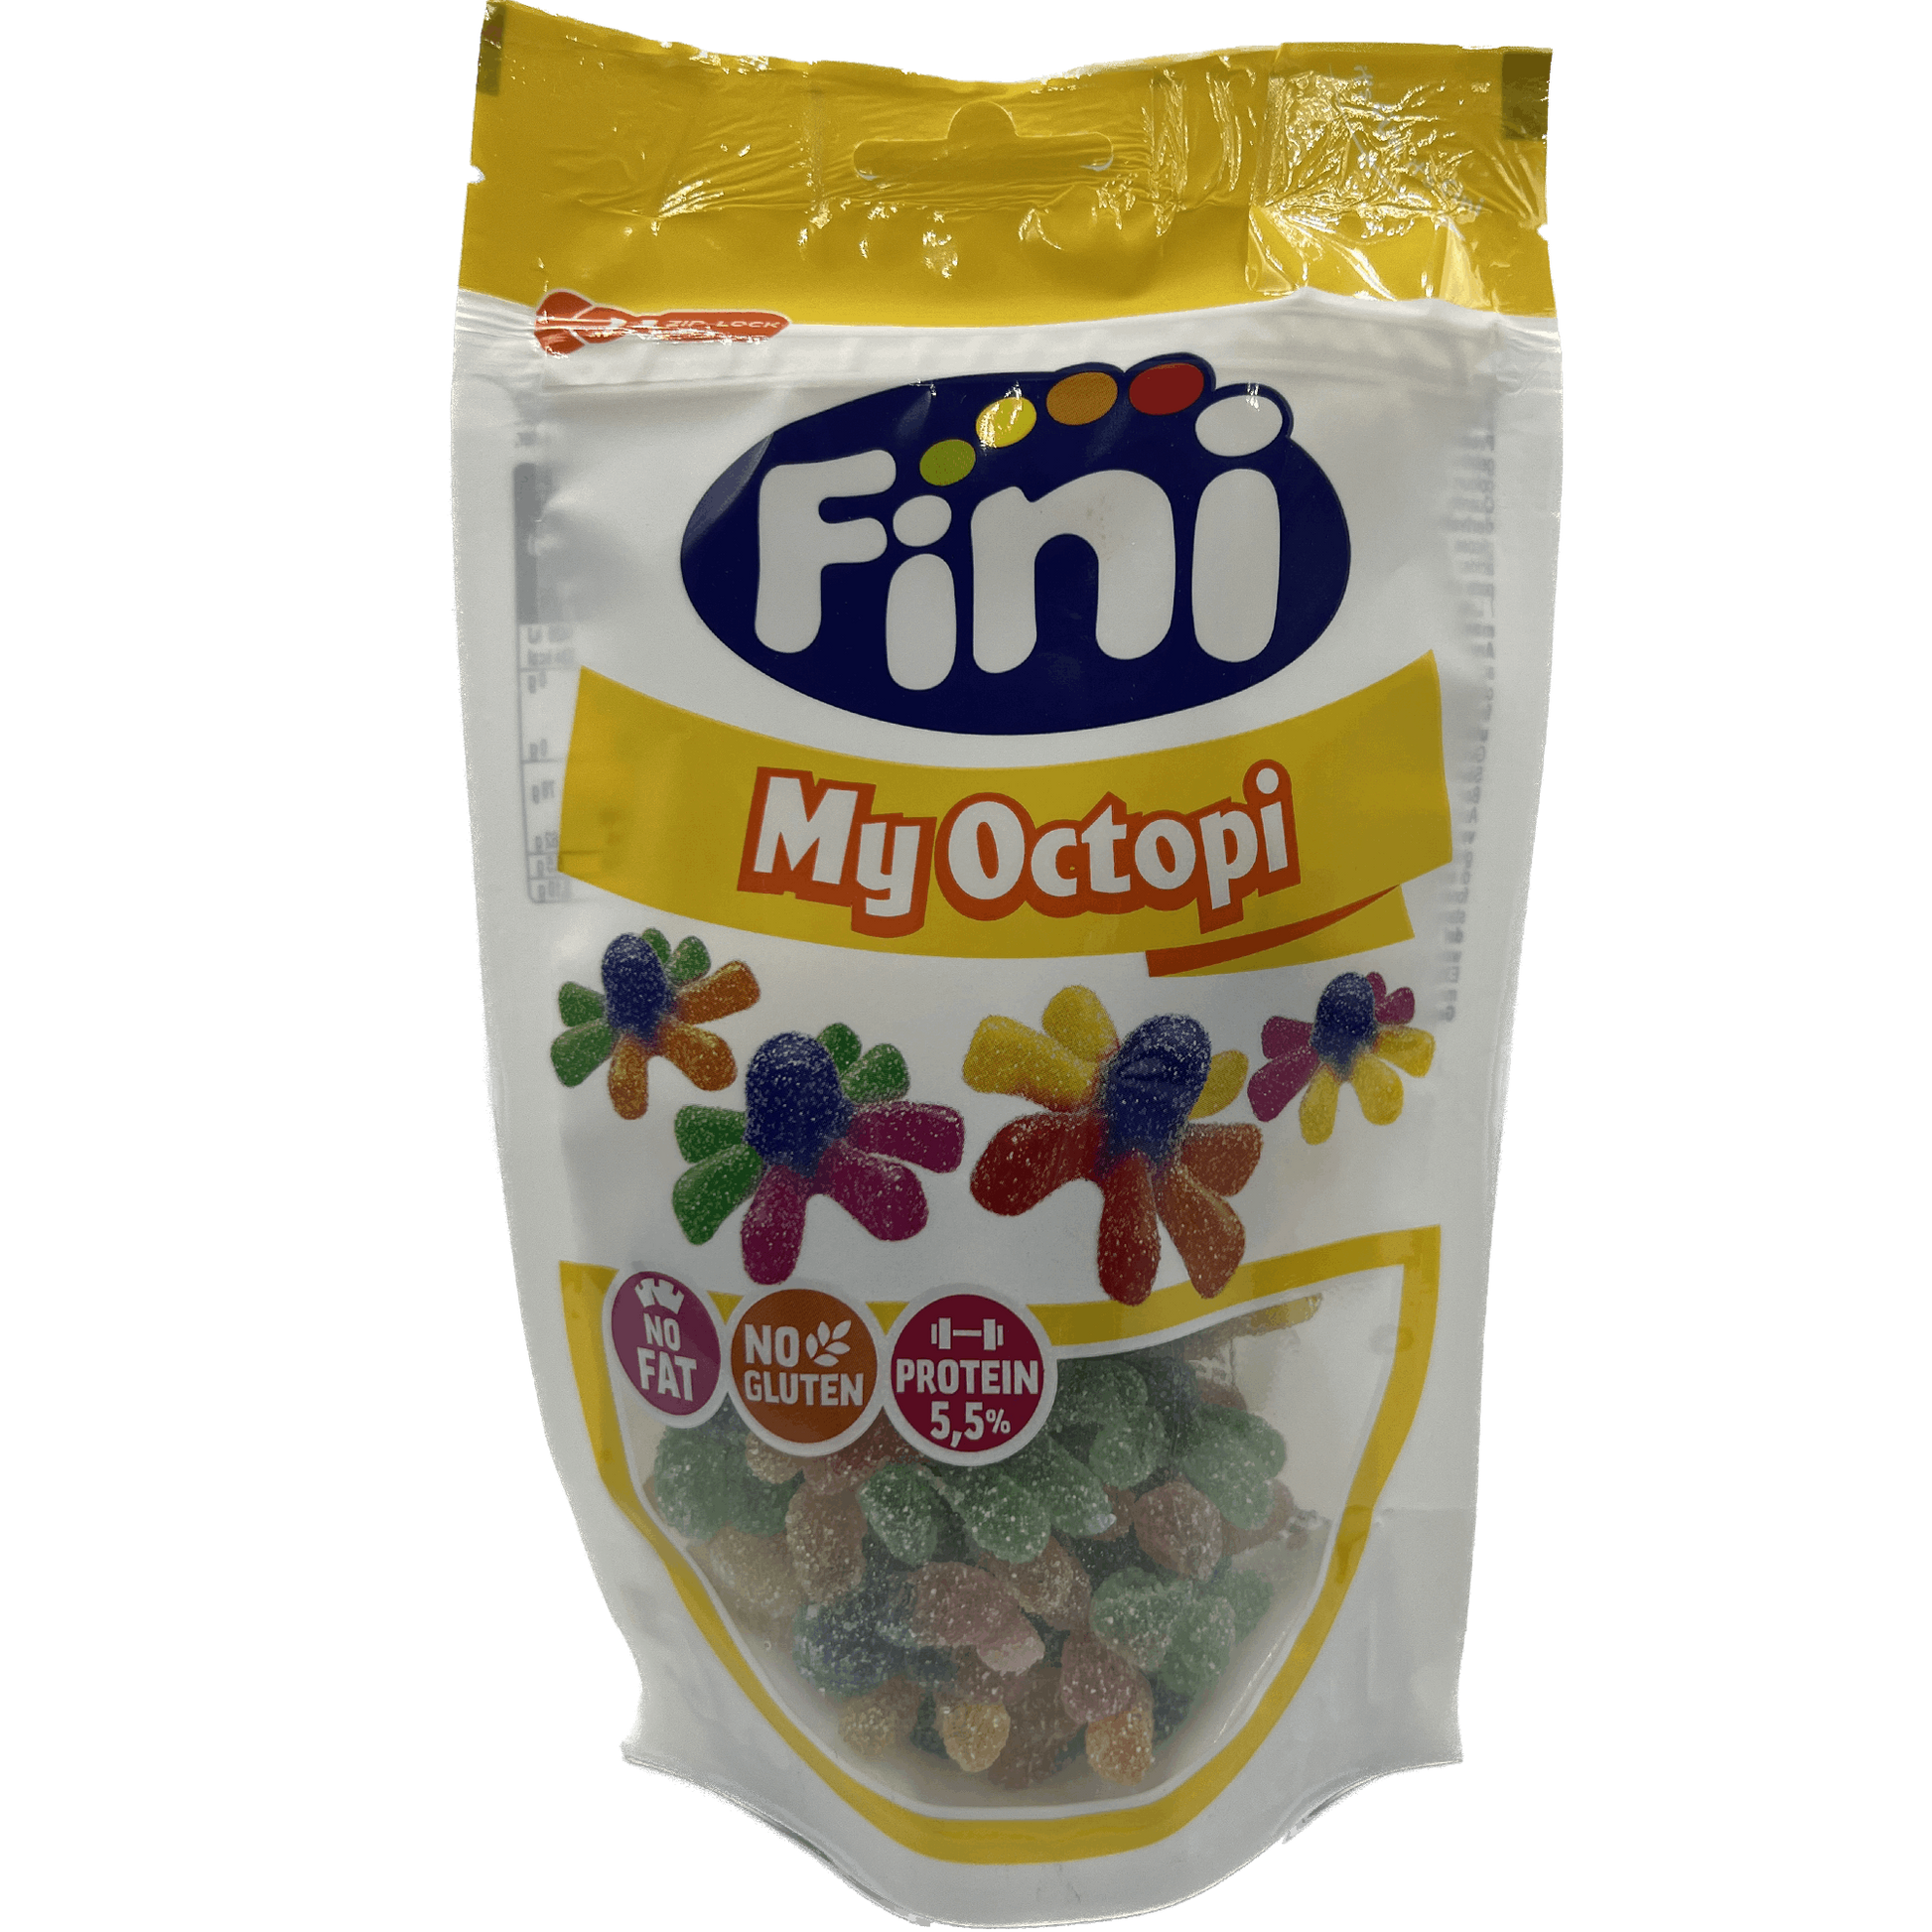 Fini - my Octopi 🐙